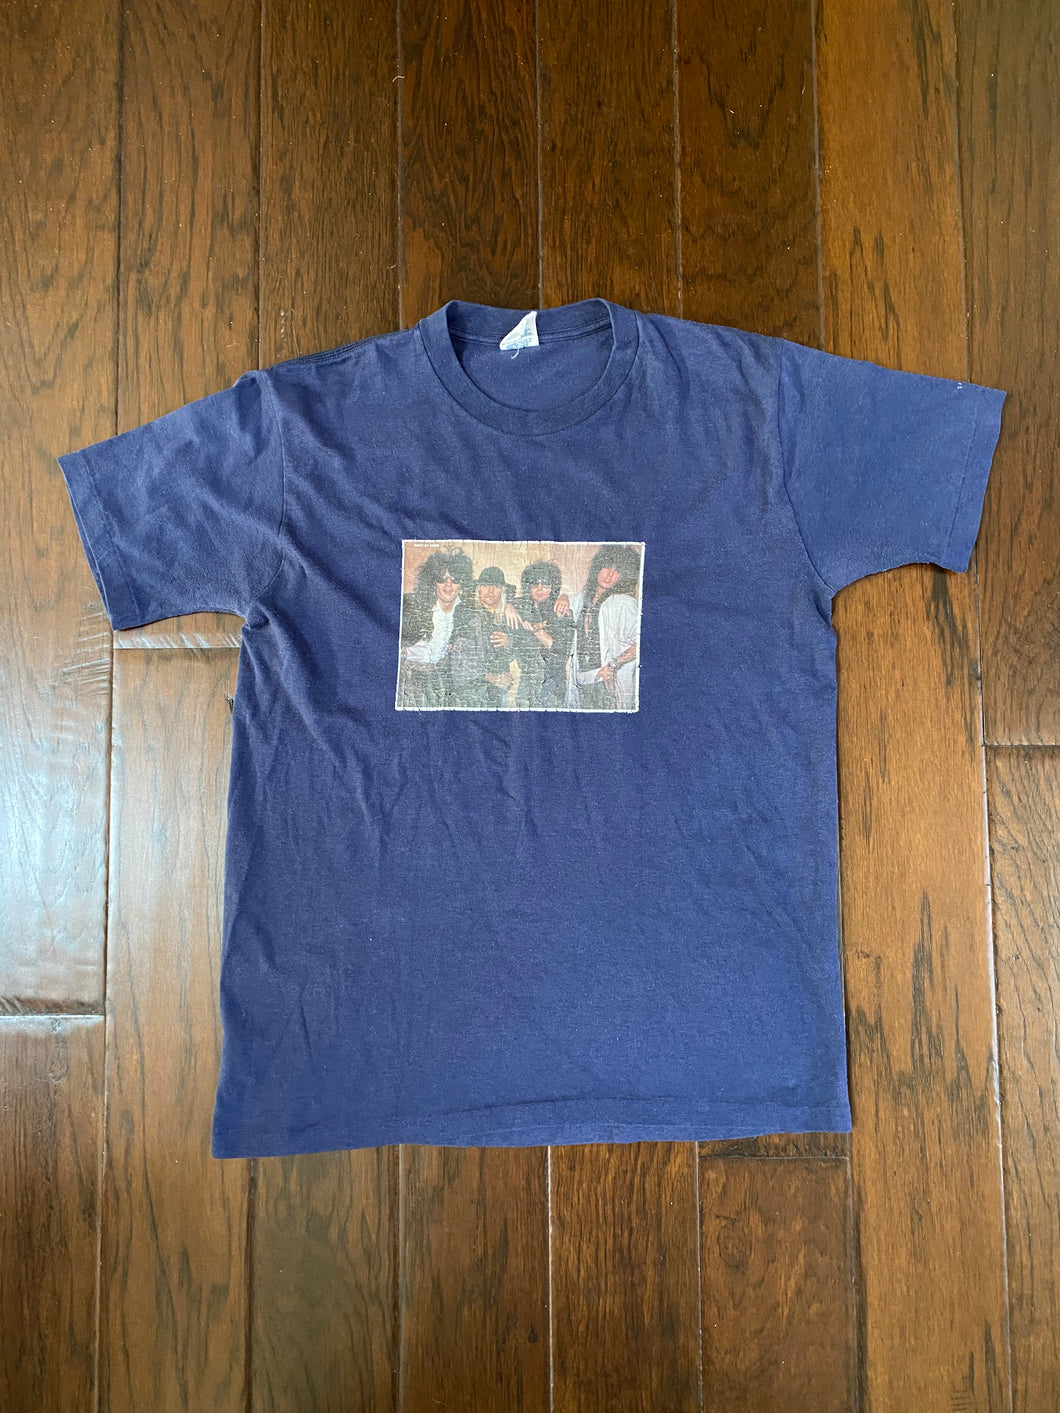 Motley Crue 1990’s Vintage Distressed T-shirt